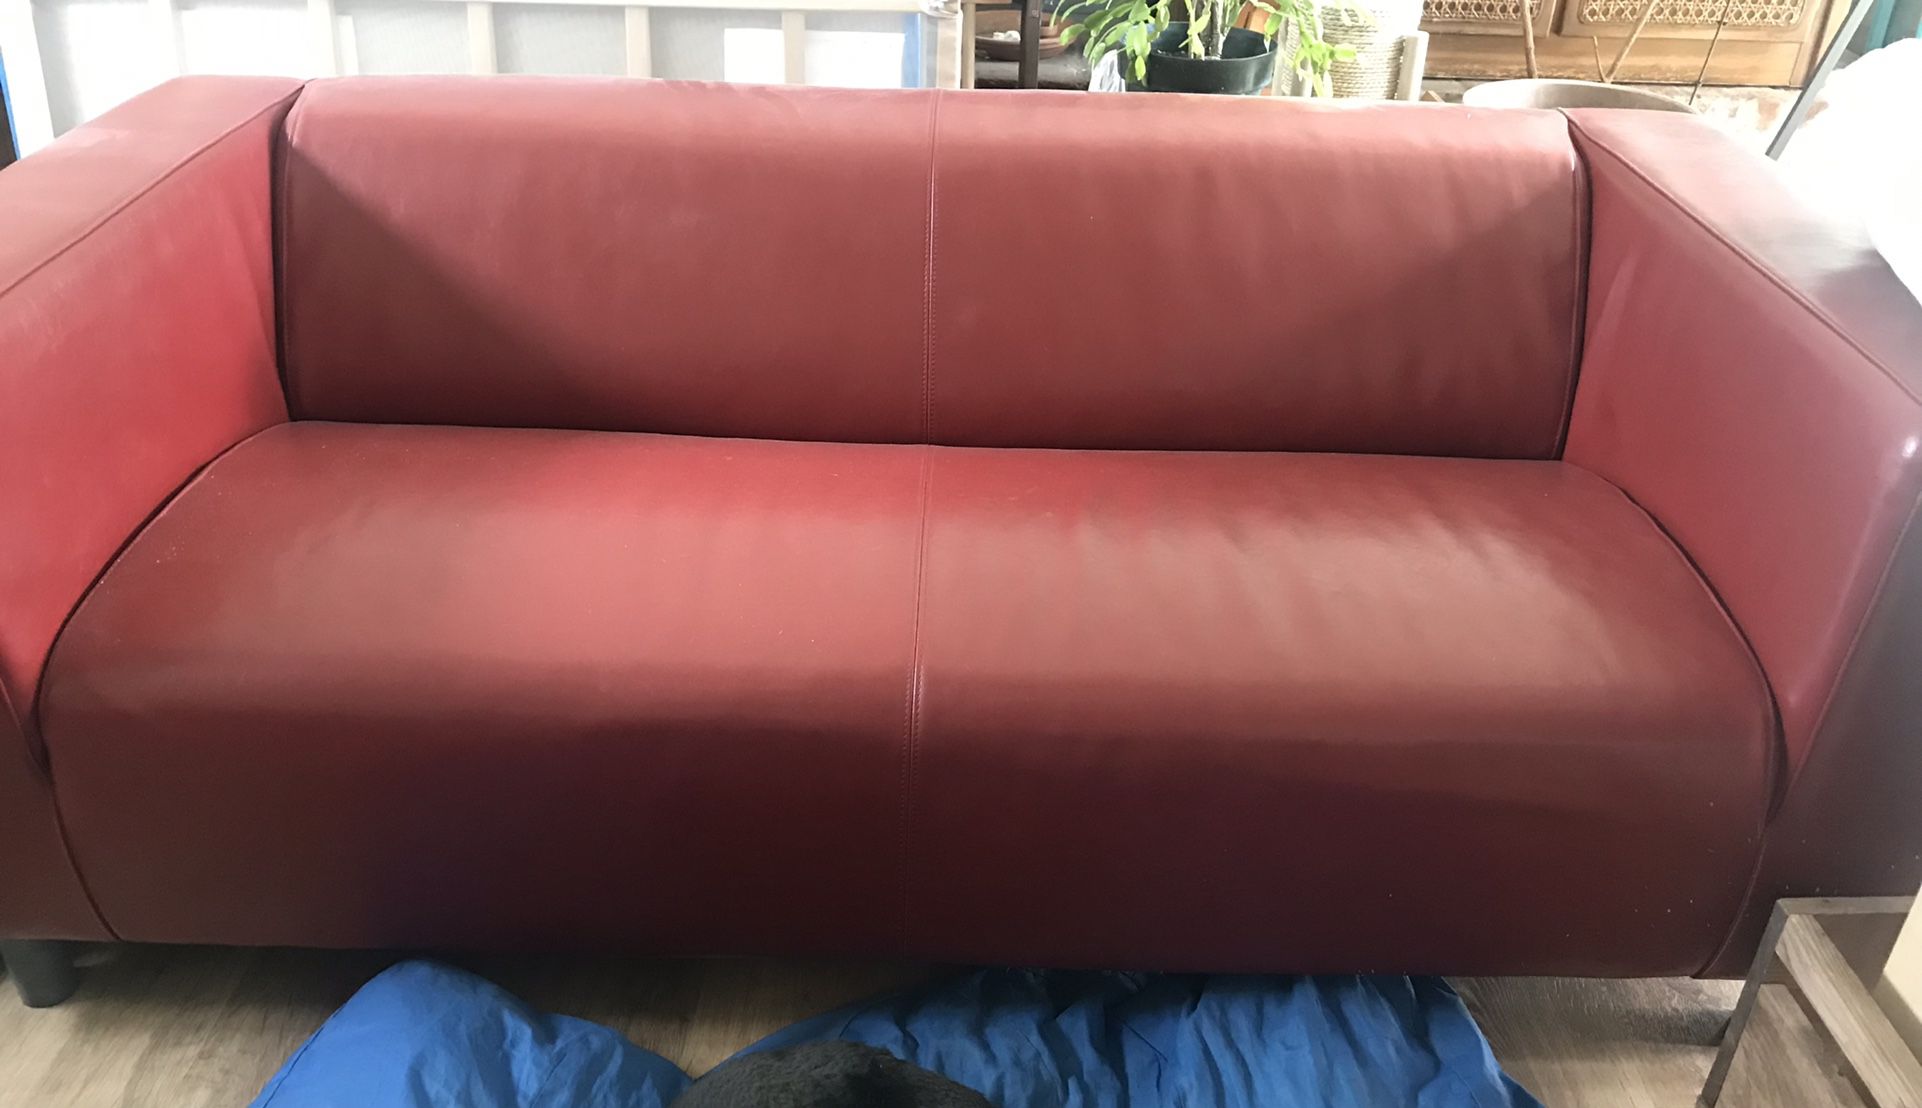 IKEA Klippan Leather Couch